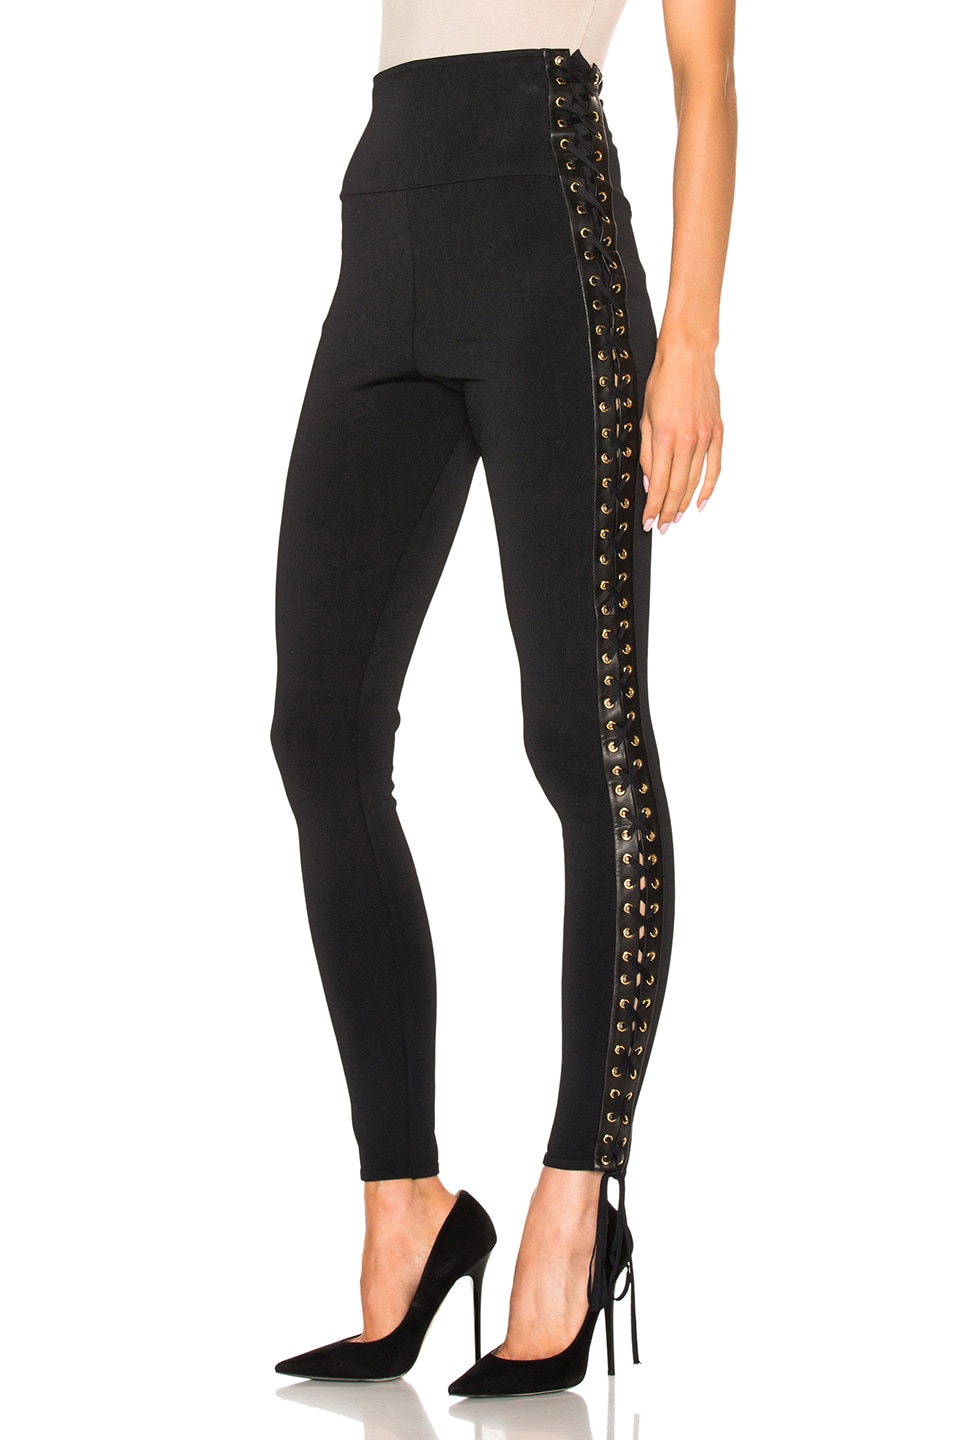 ALEXANDRE VAUTHIER Lace Up Side Knit Pants in Black | ModeSens